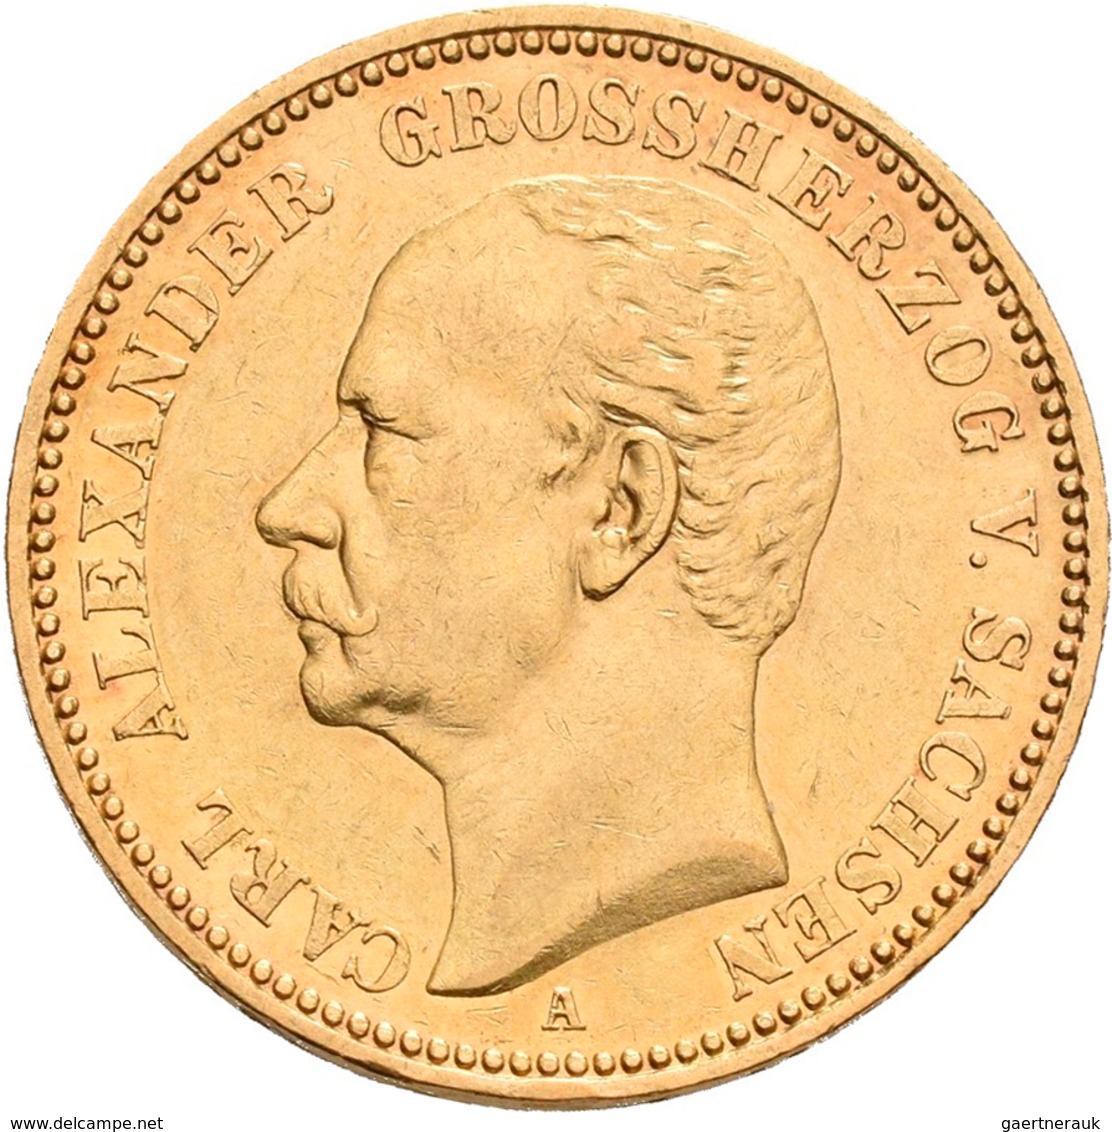 Sachsen-Weimar-Eisenach: Carl Alexander 1853-1901: 20 Mark 1892 A, Jaeger 282. 7,95 G, 900/1000 Gold - Goldmünzen